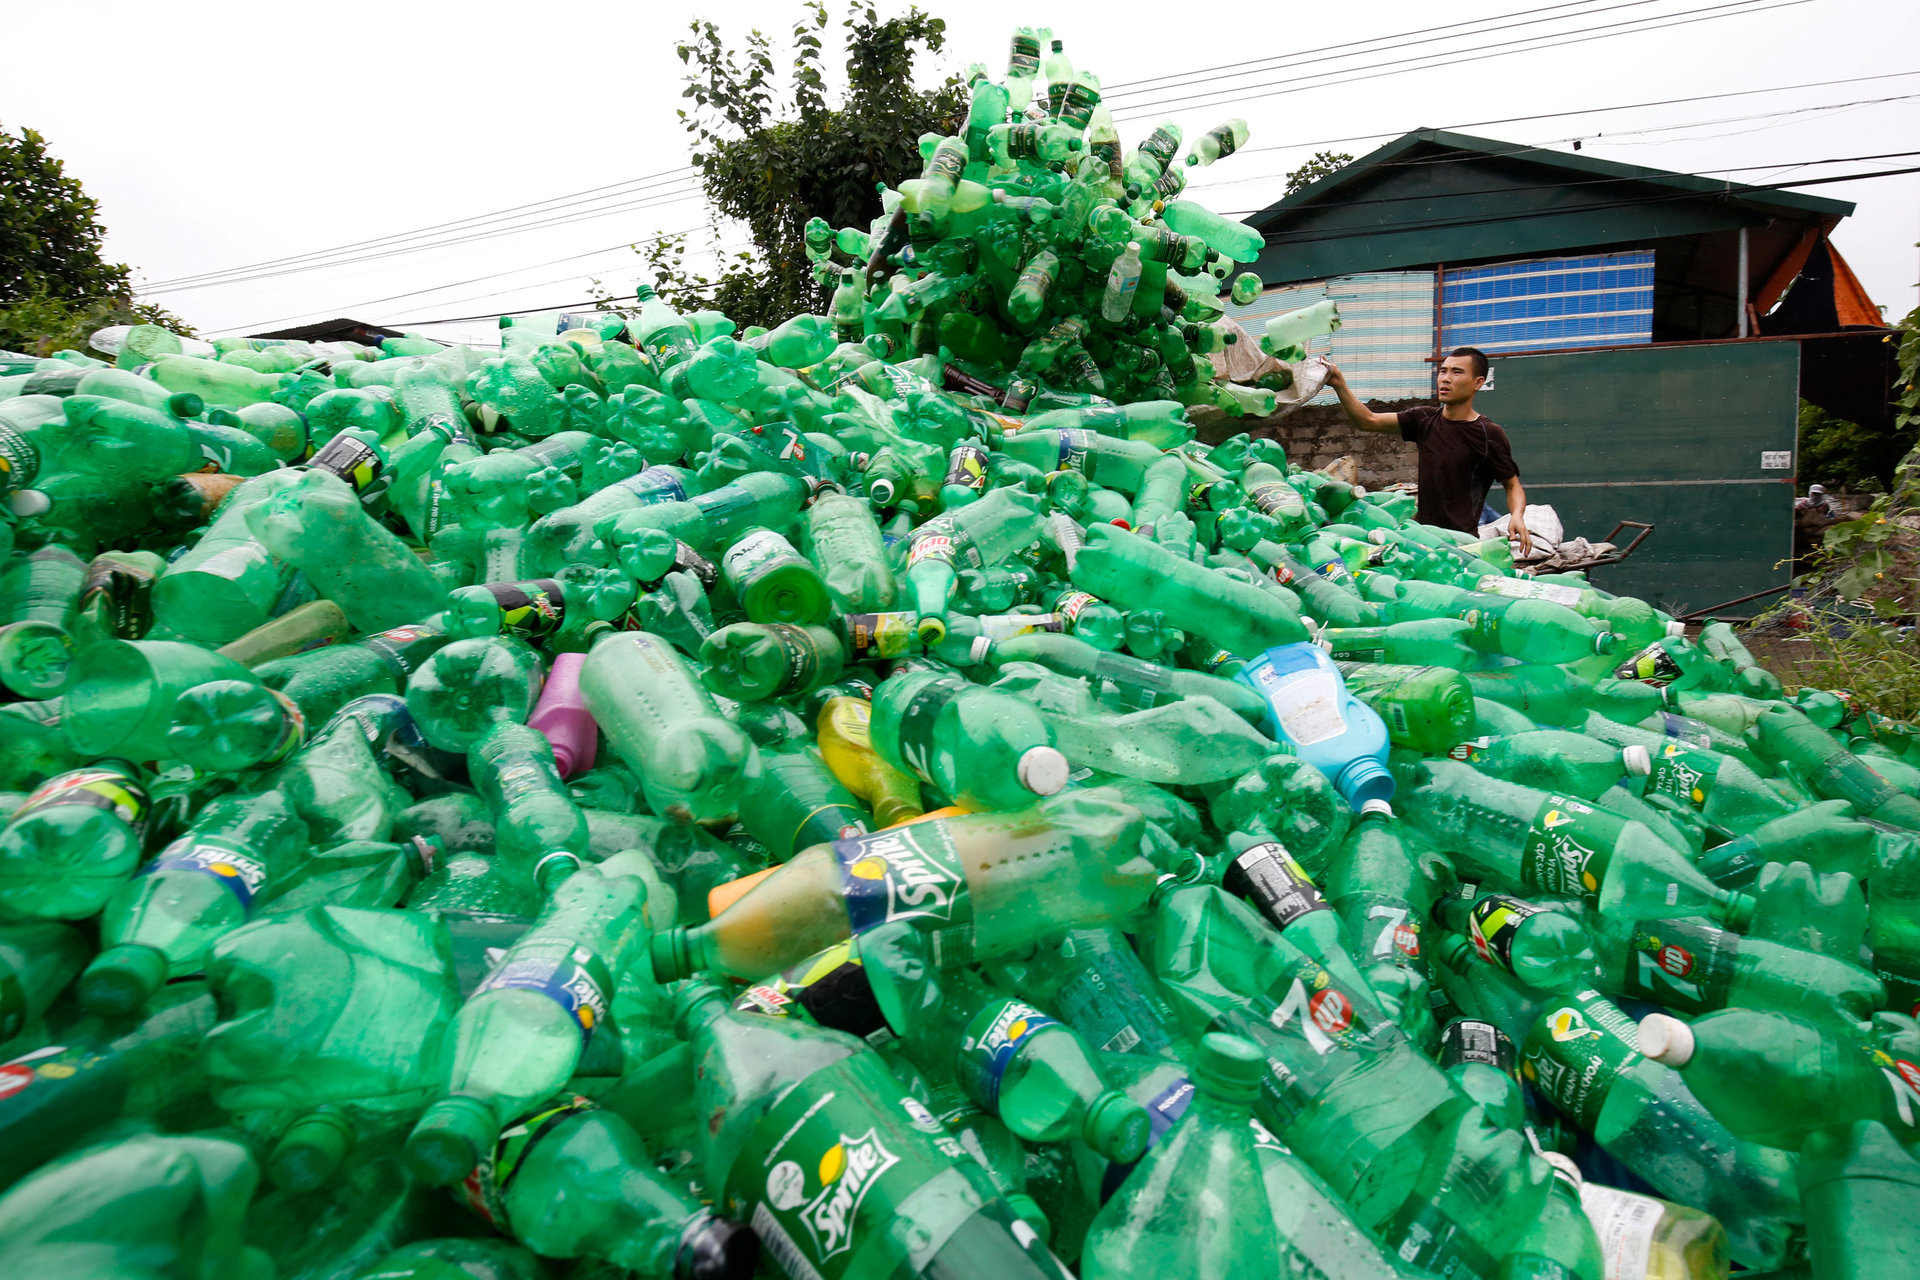 Recycling in VietNam